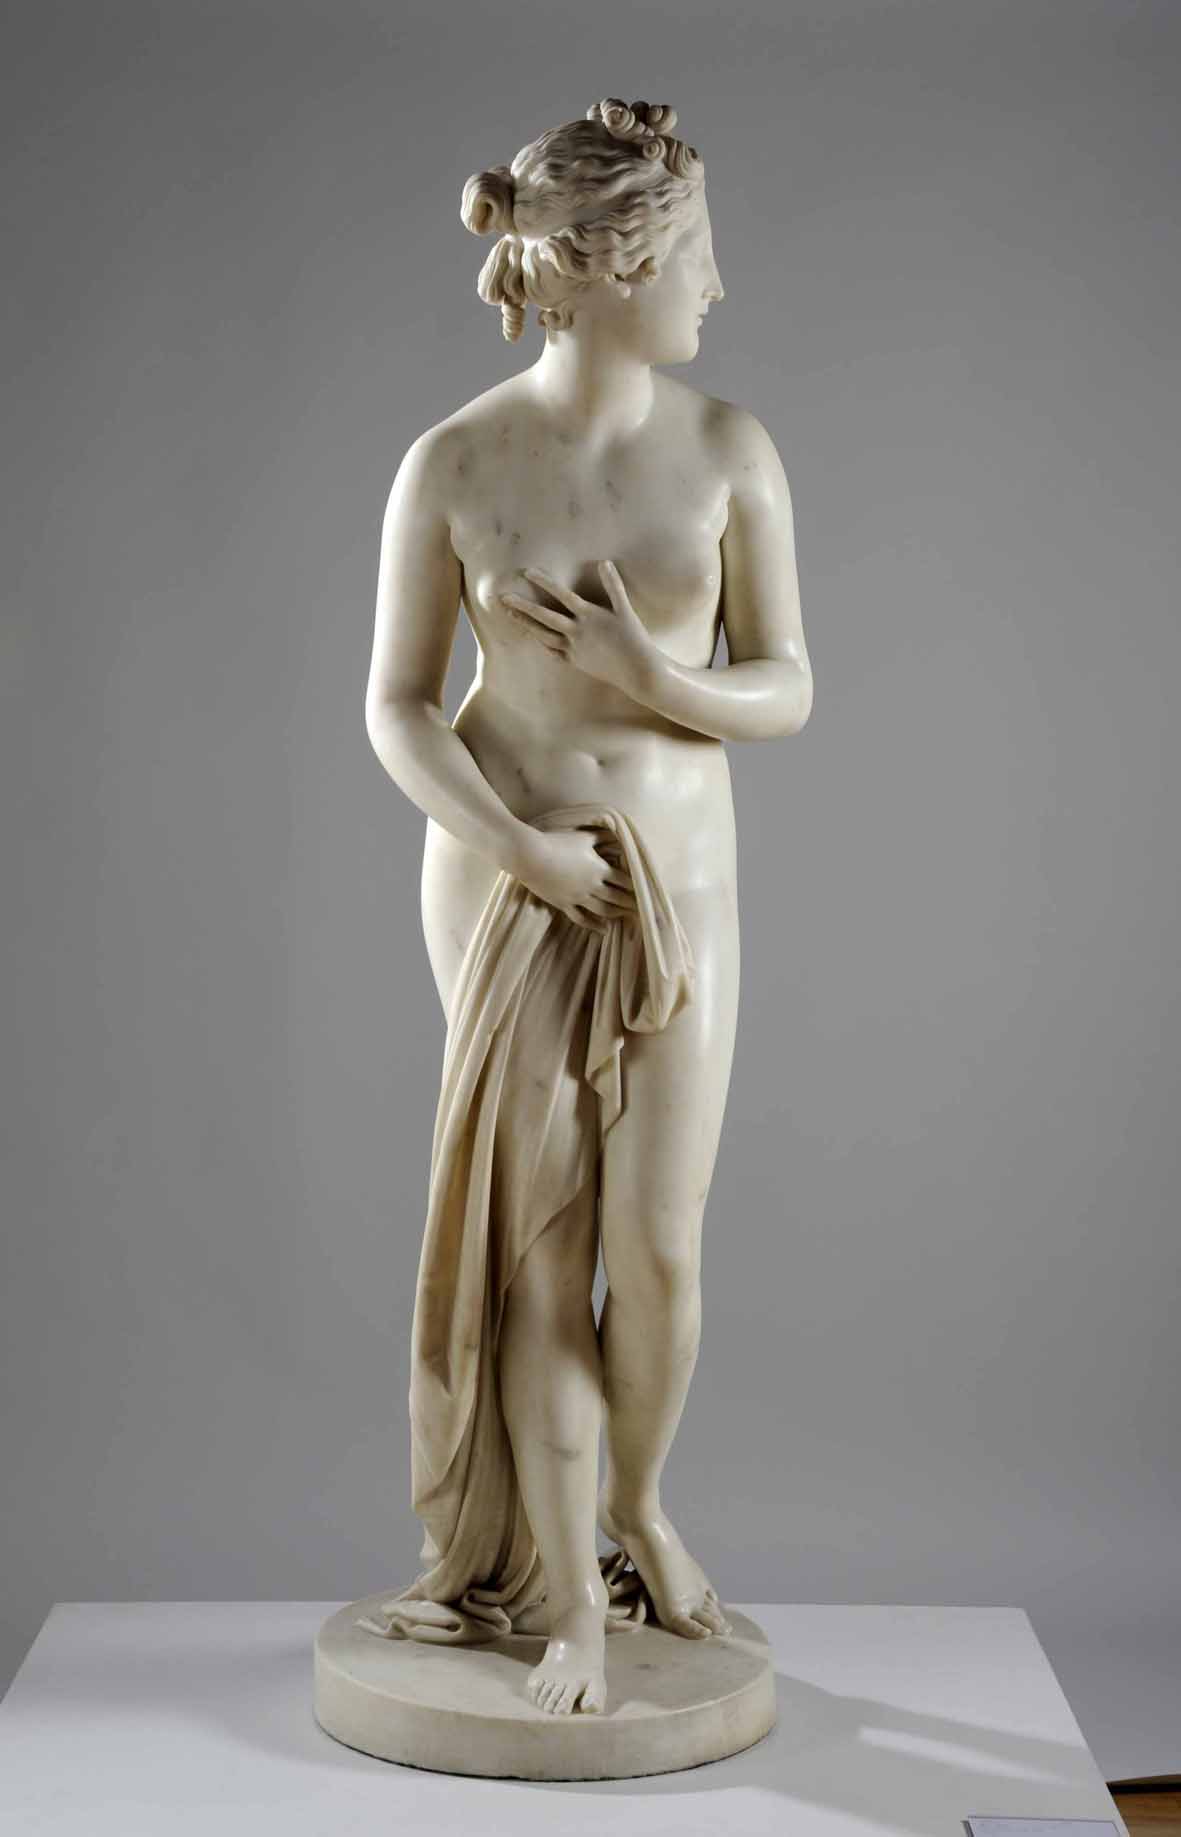 Antonio Canova, Venere (1817-1820; marmo, 117 x 52 x 70 cm; Leeds, Leeds Art Gallery, inv. LEEAG.sc.1959.0021.003)
